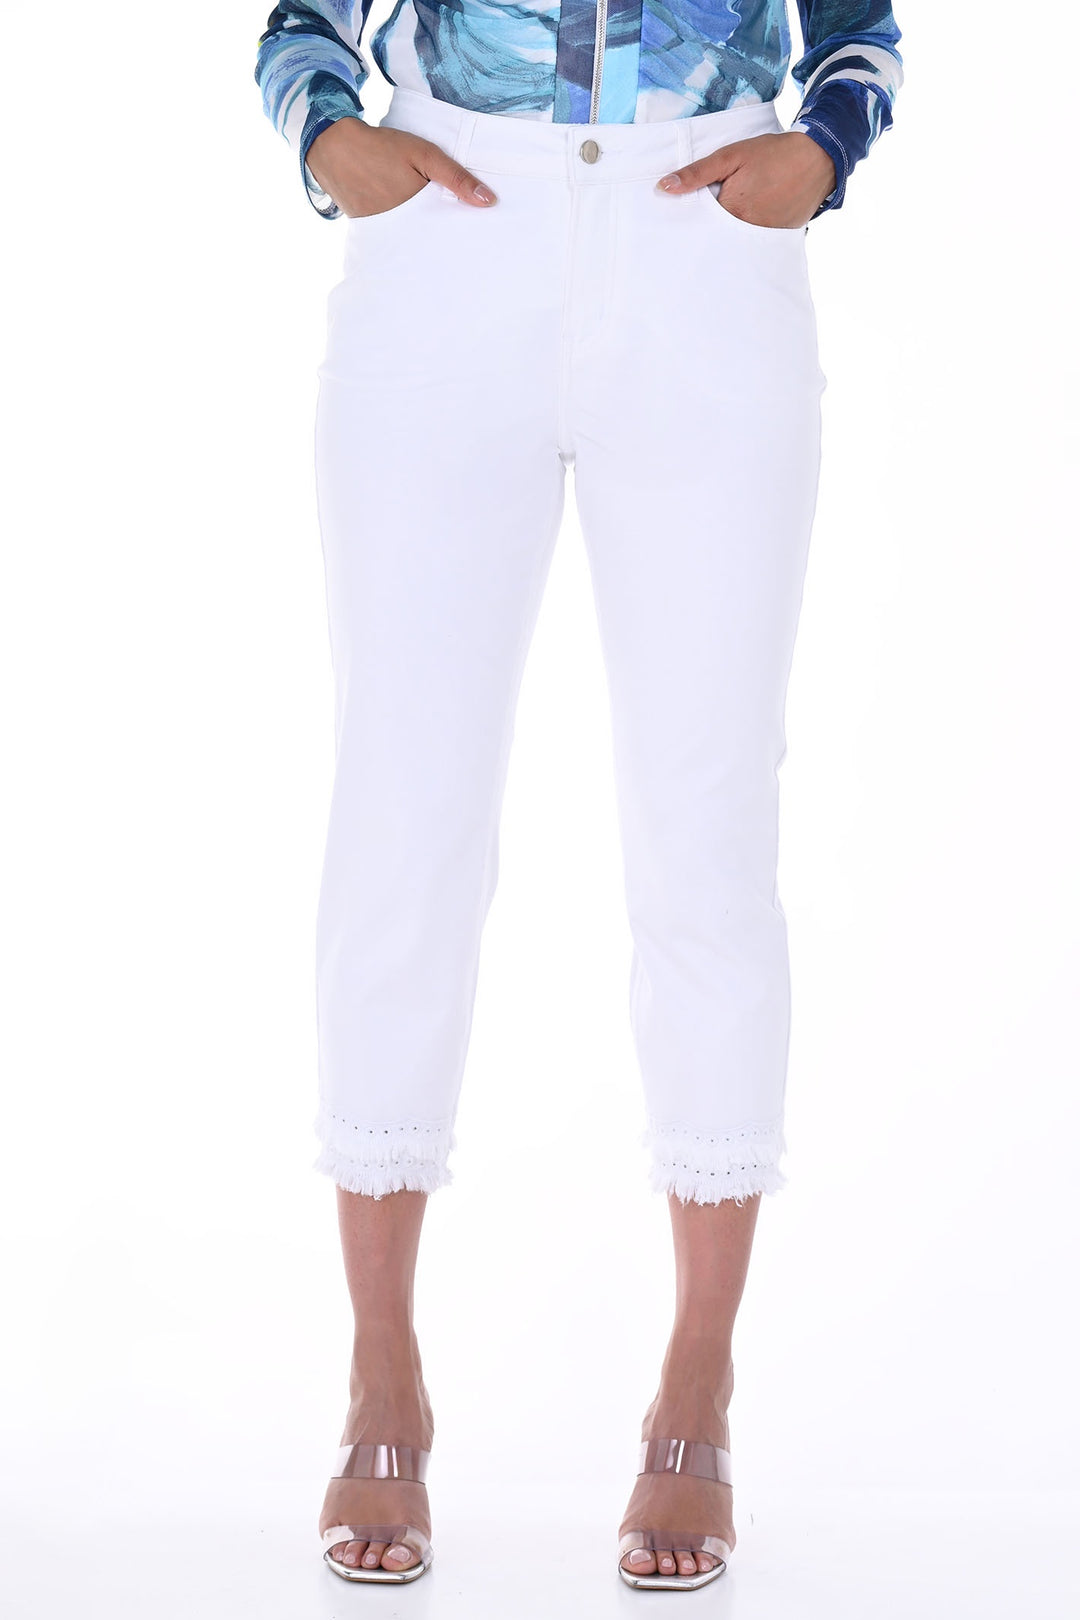 Frank Lyman 246255U White Frayed Hem Cropped Jeans - Dotique